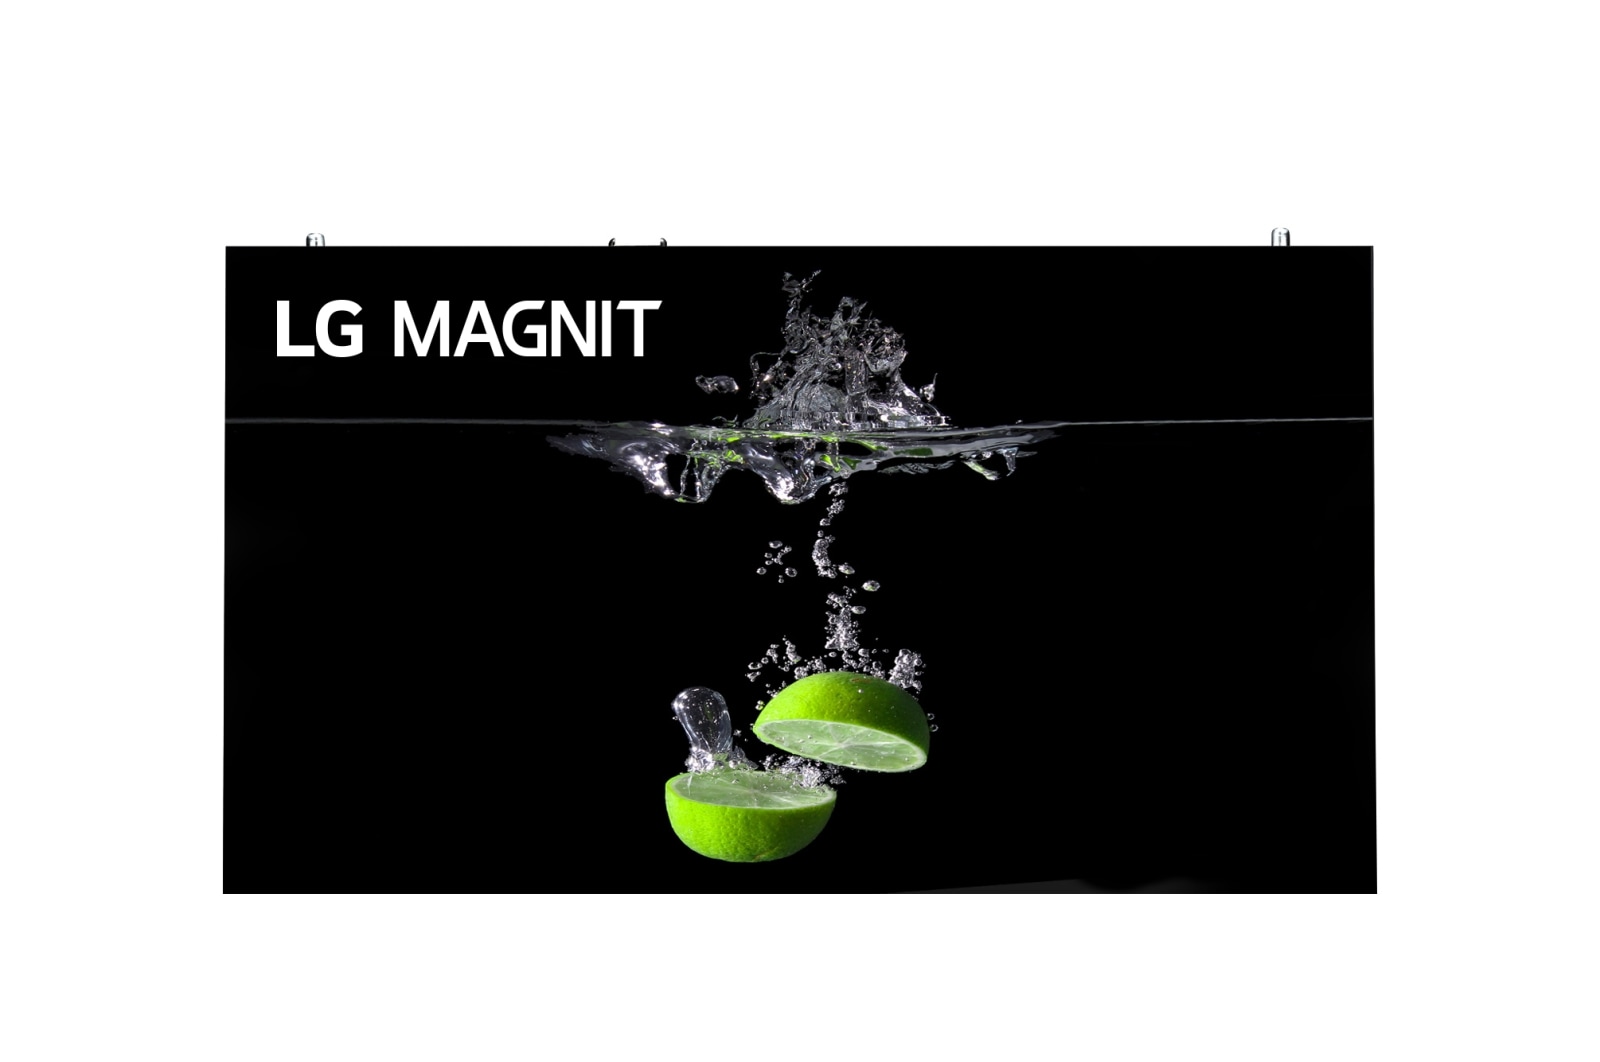 LG MAGNIT, LSAB009-T14